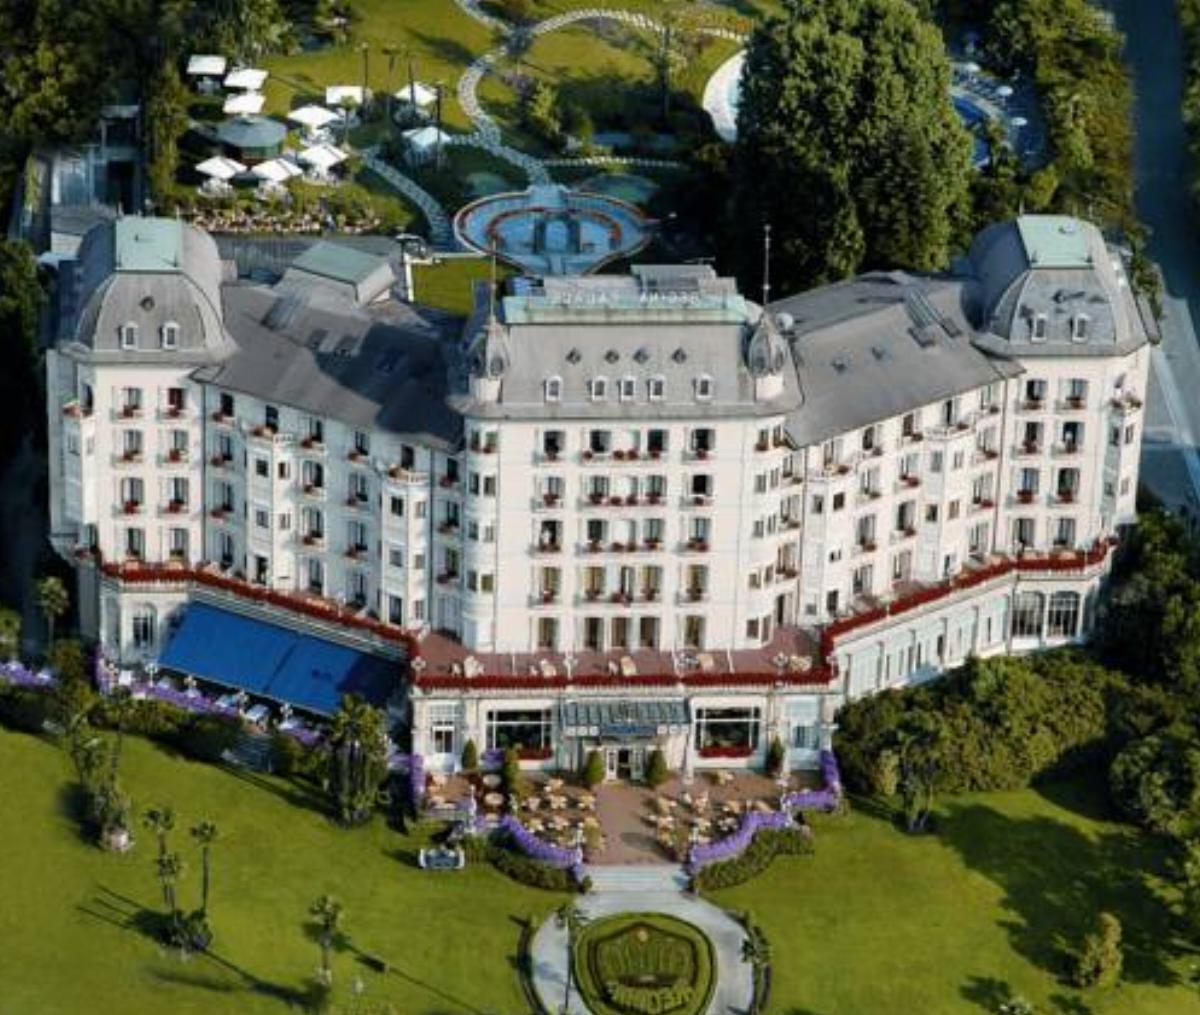 Hotel Regina Palace